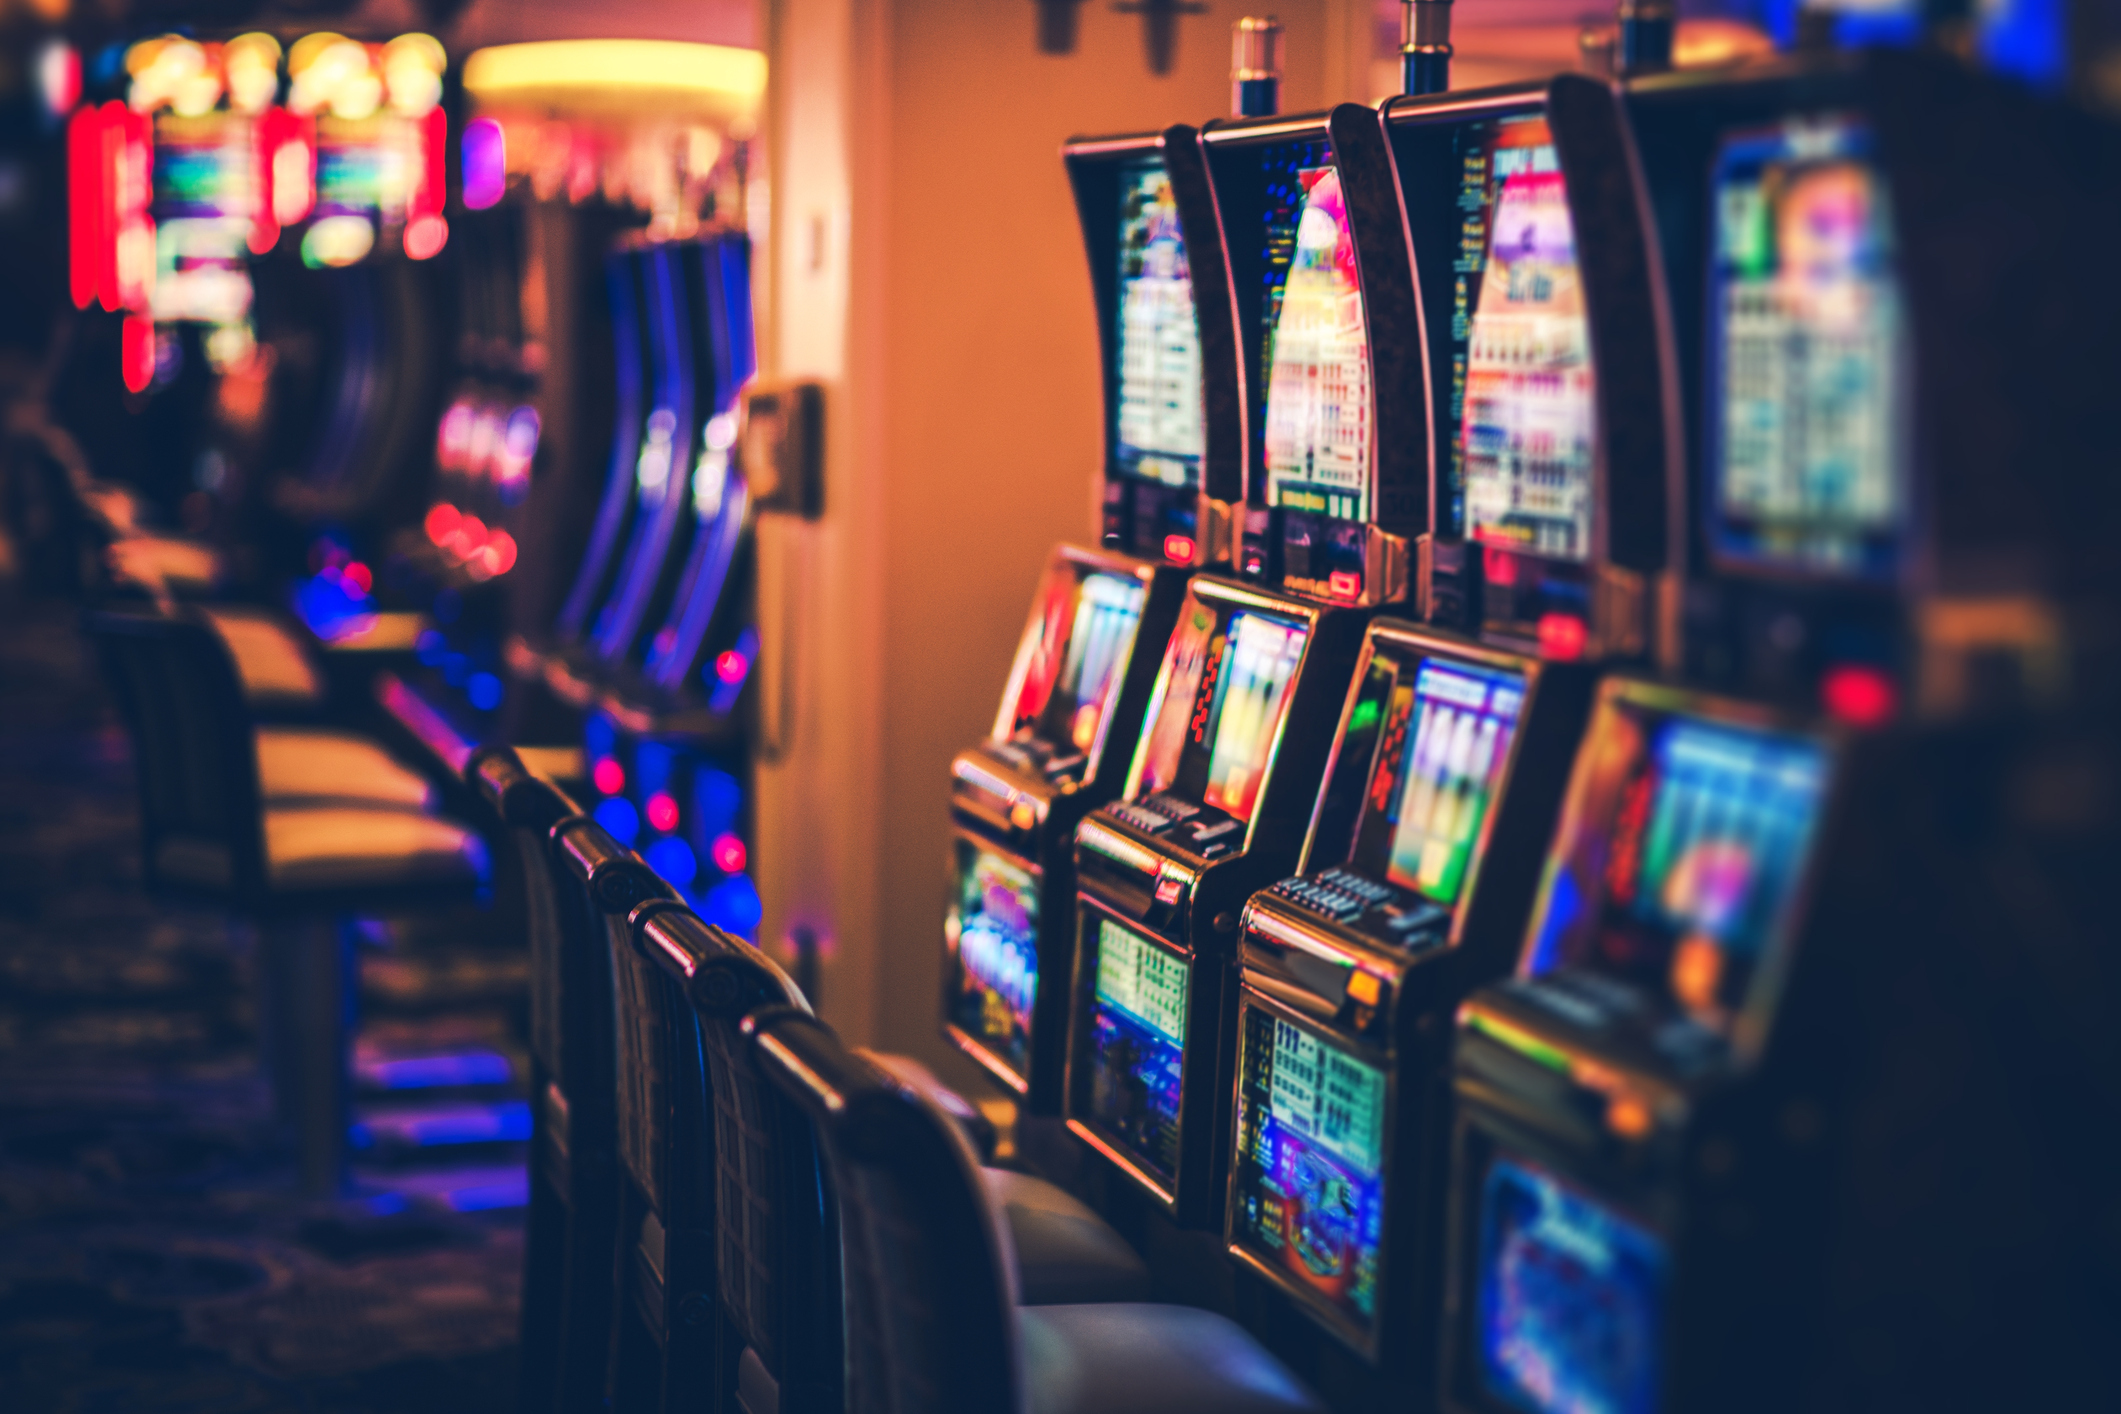 louisiana legislature vote on harrahs casino